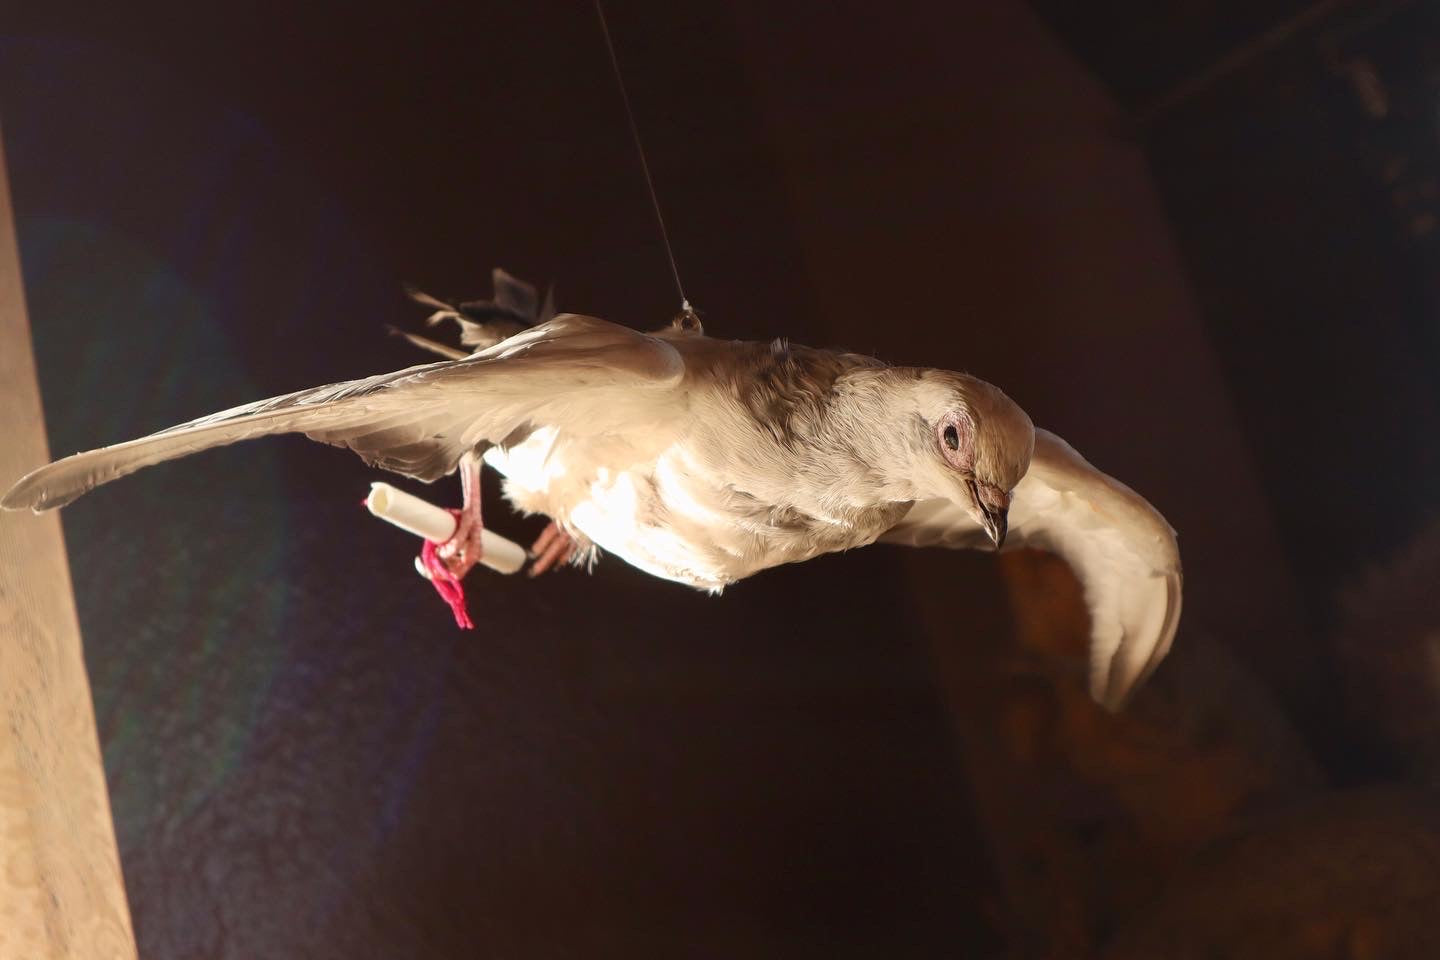 Taxidermy Pigeon